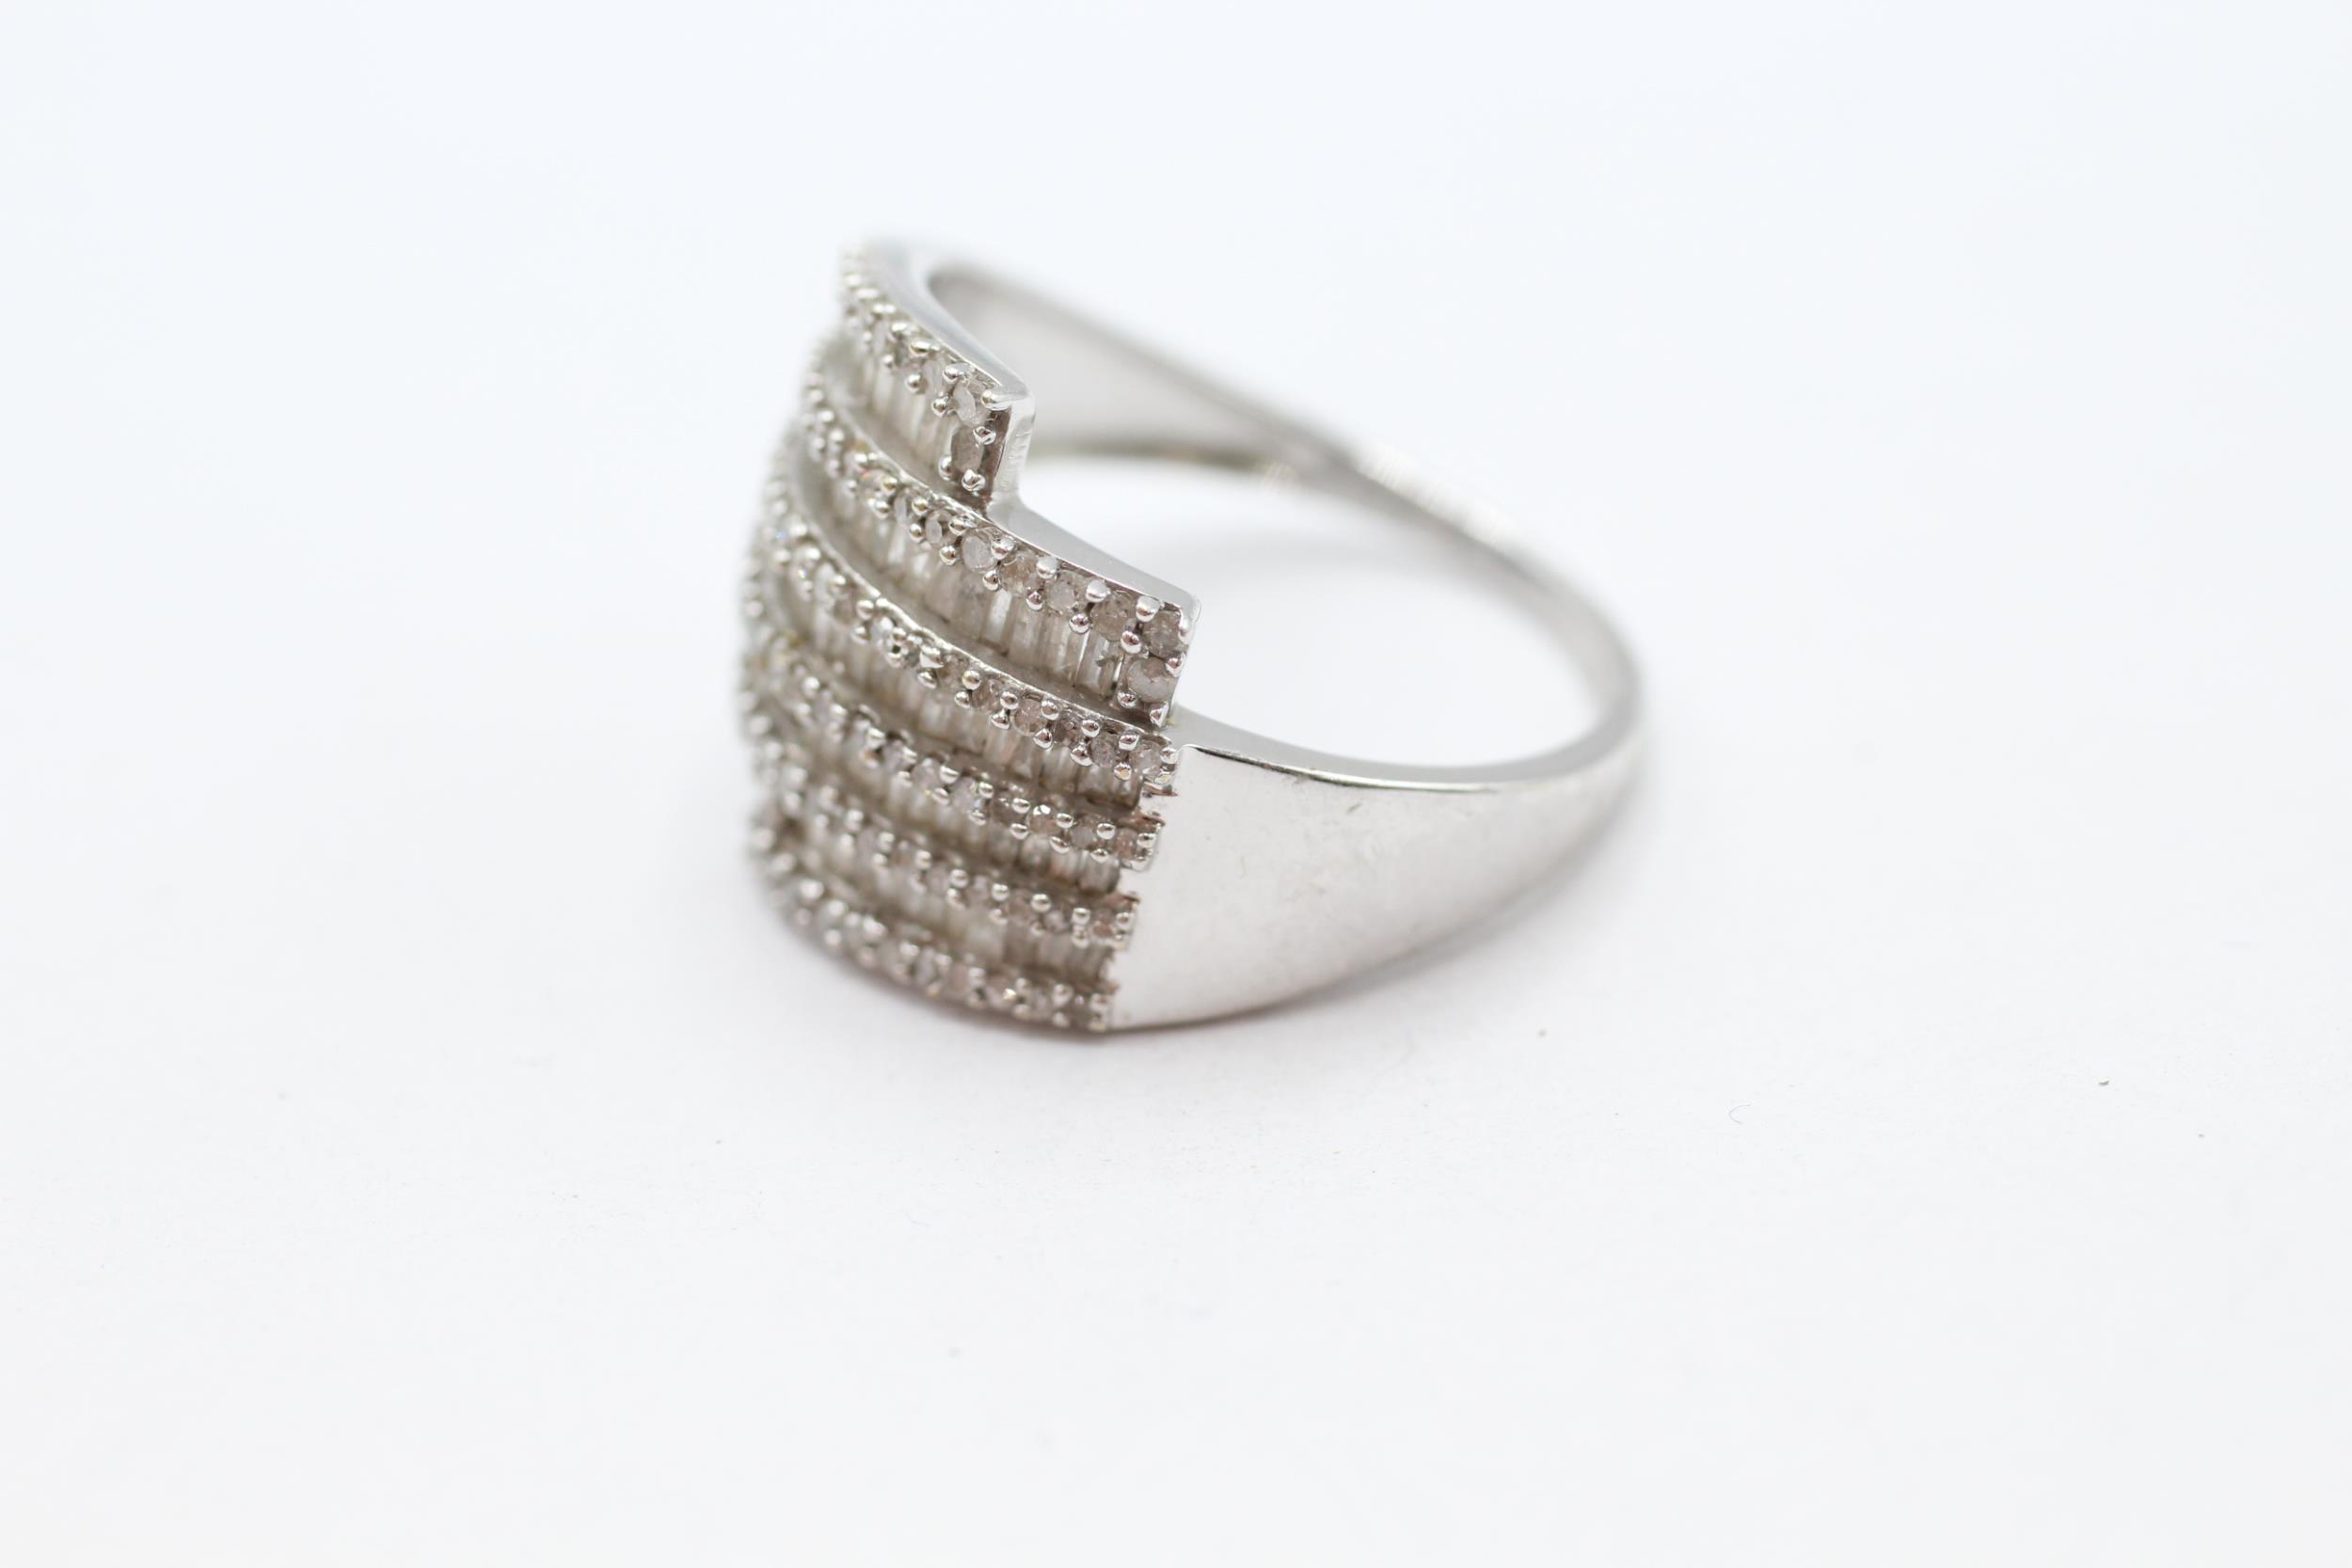 9ct white gold vari-cut diamond dress ring Size Q 4.8 g - Image 3 of 4